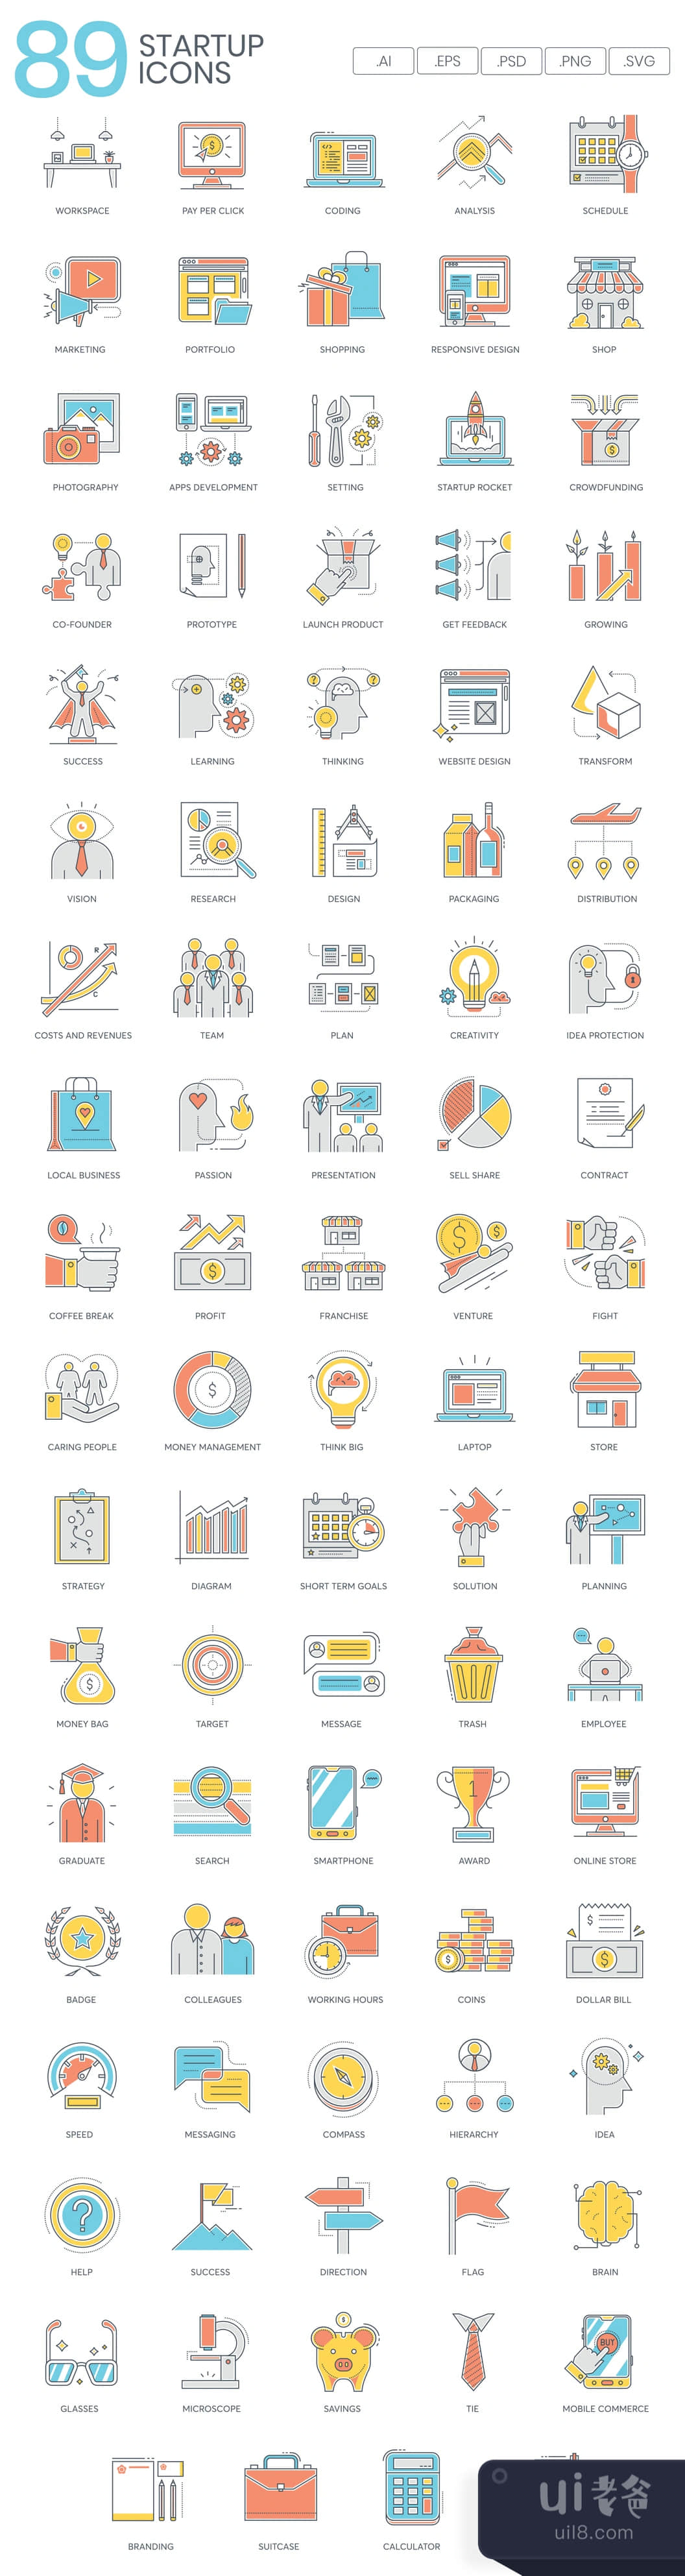 创业公司图标 (Startup Icons)插图1